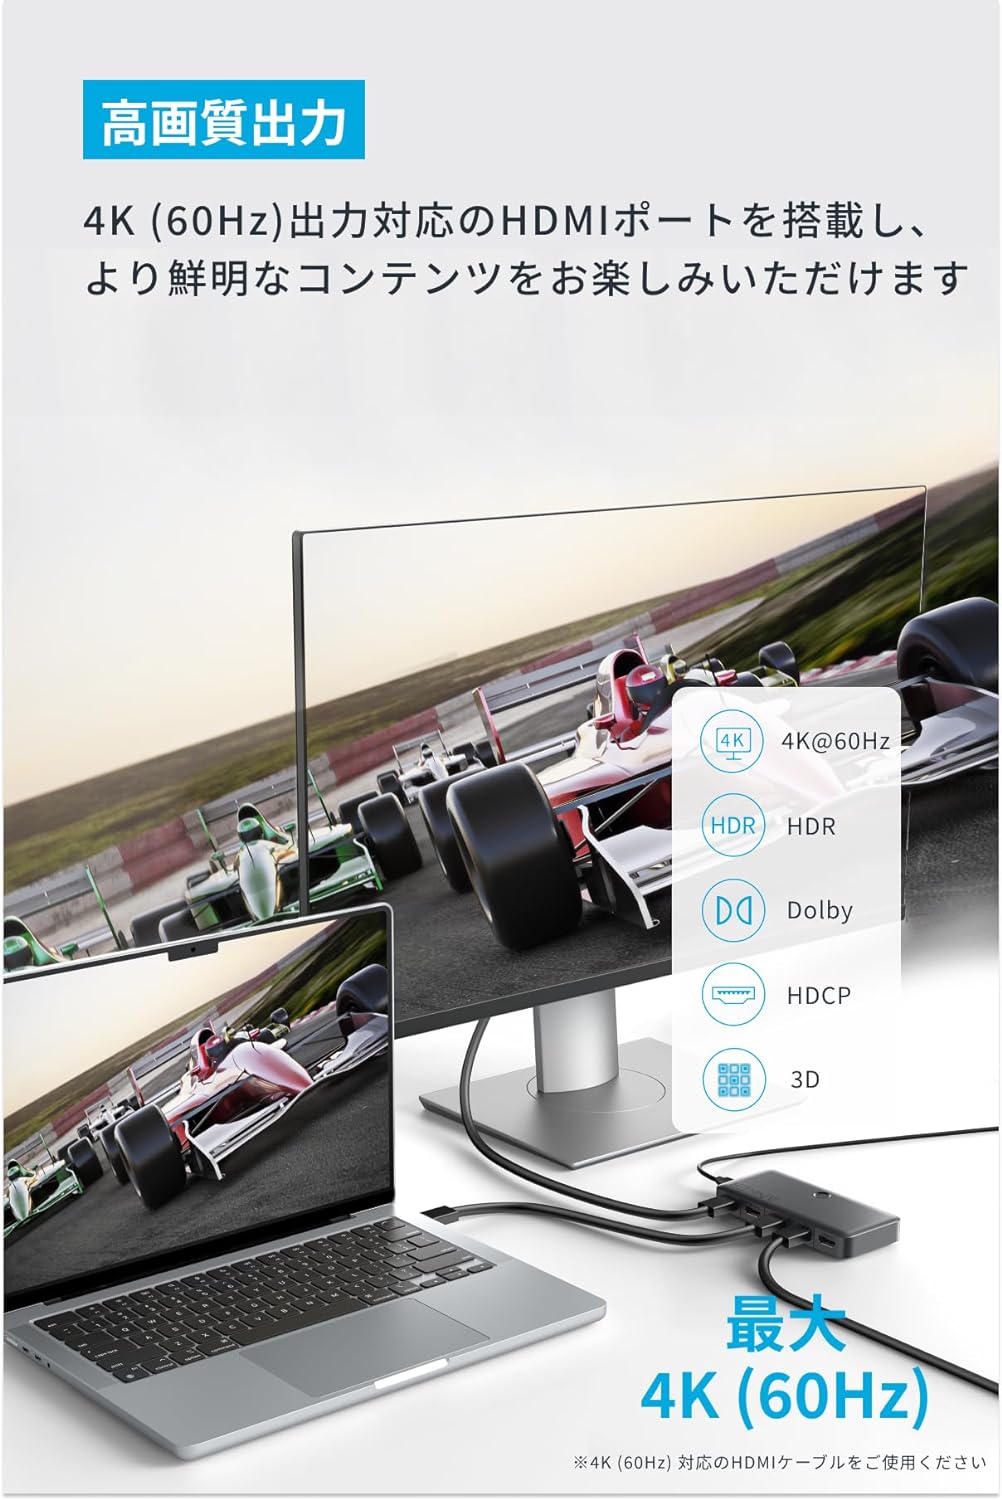 Anker HDMI Switch (4-in-1 Out, 4K HDMI) селектор с дистанционным пультом 4K HDR 3D содержание соответствует HDMI переключатель MacBook Pro/Air Switch Xbox 360 PS4 / PS5 др. 